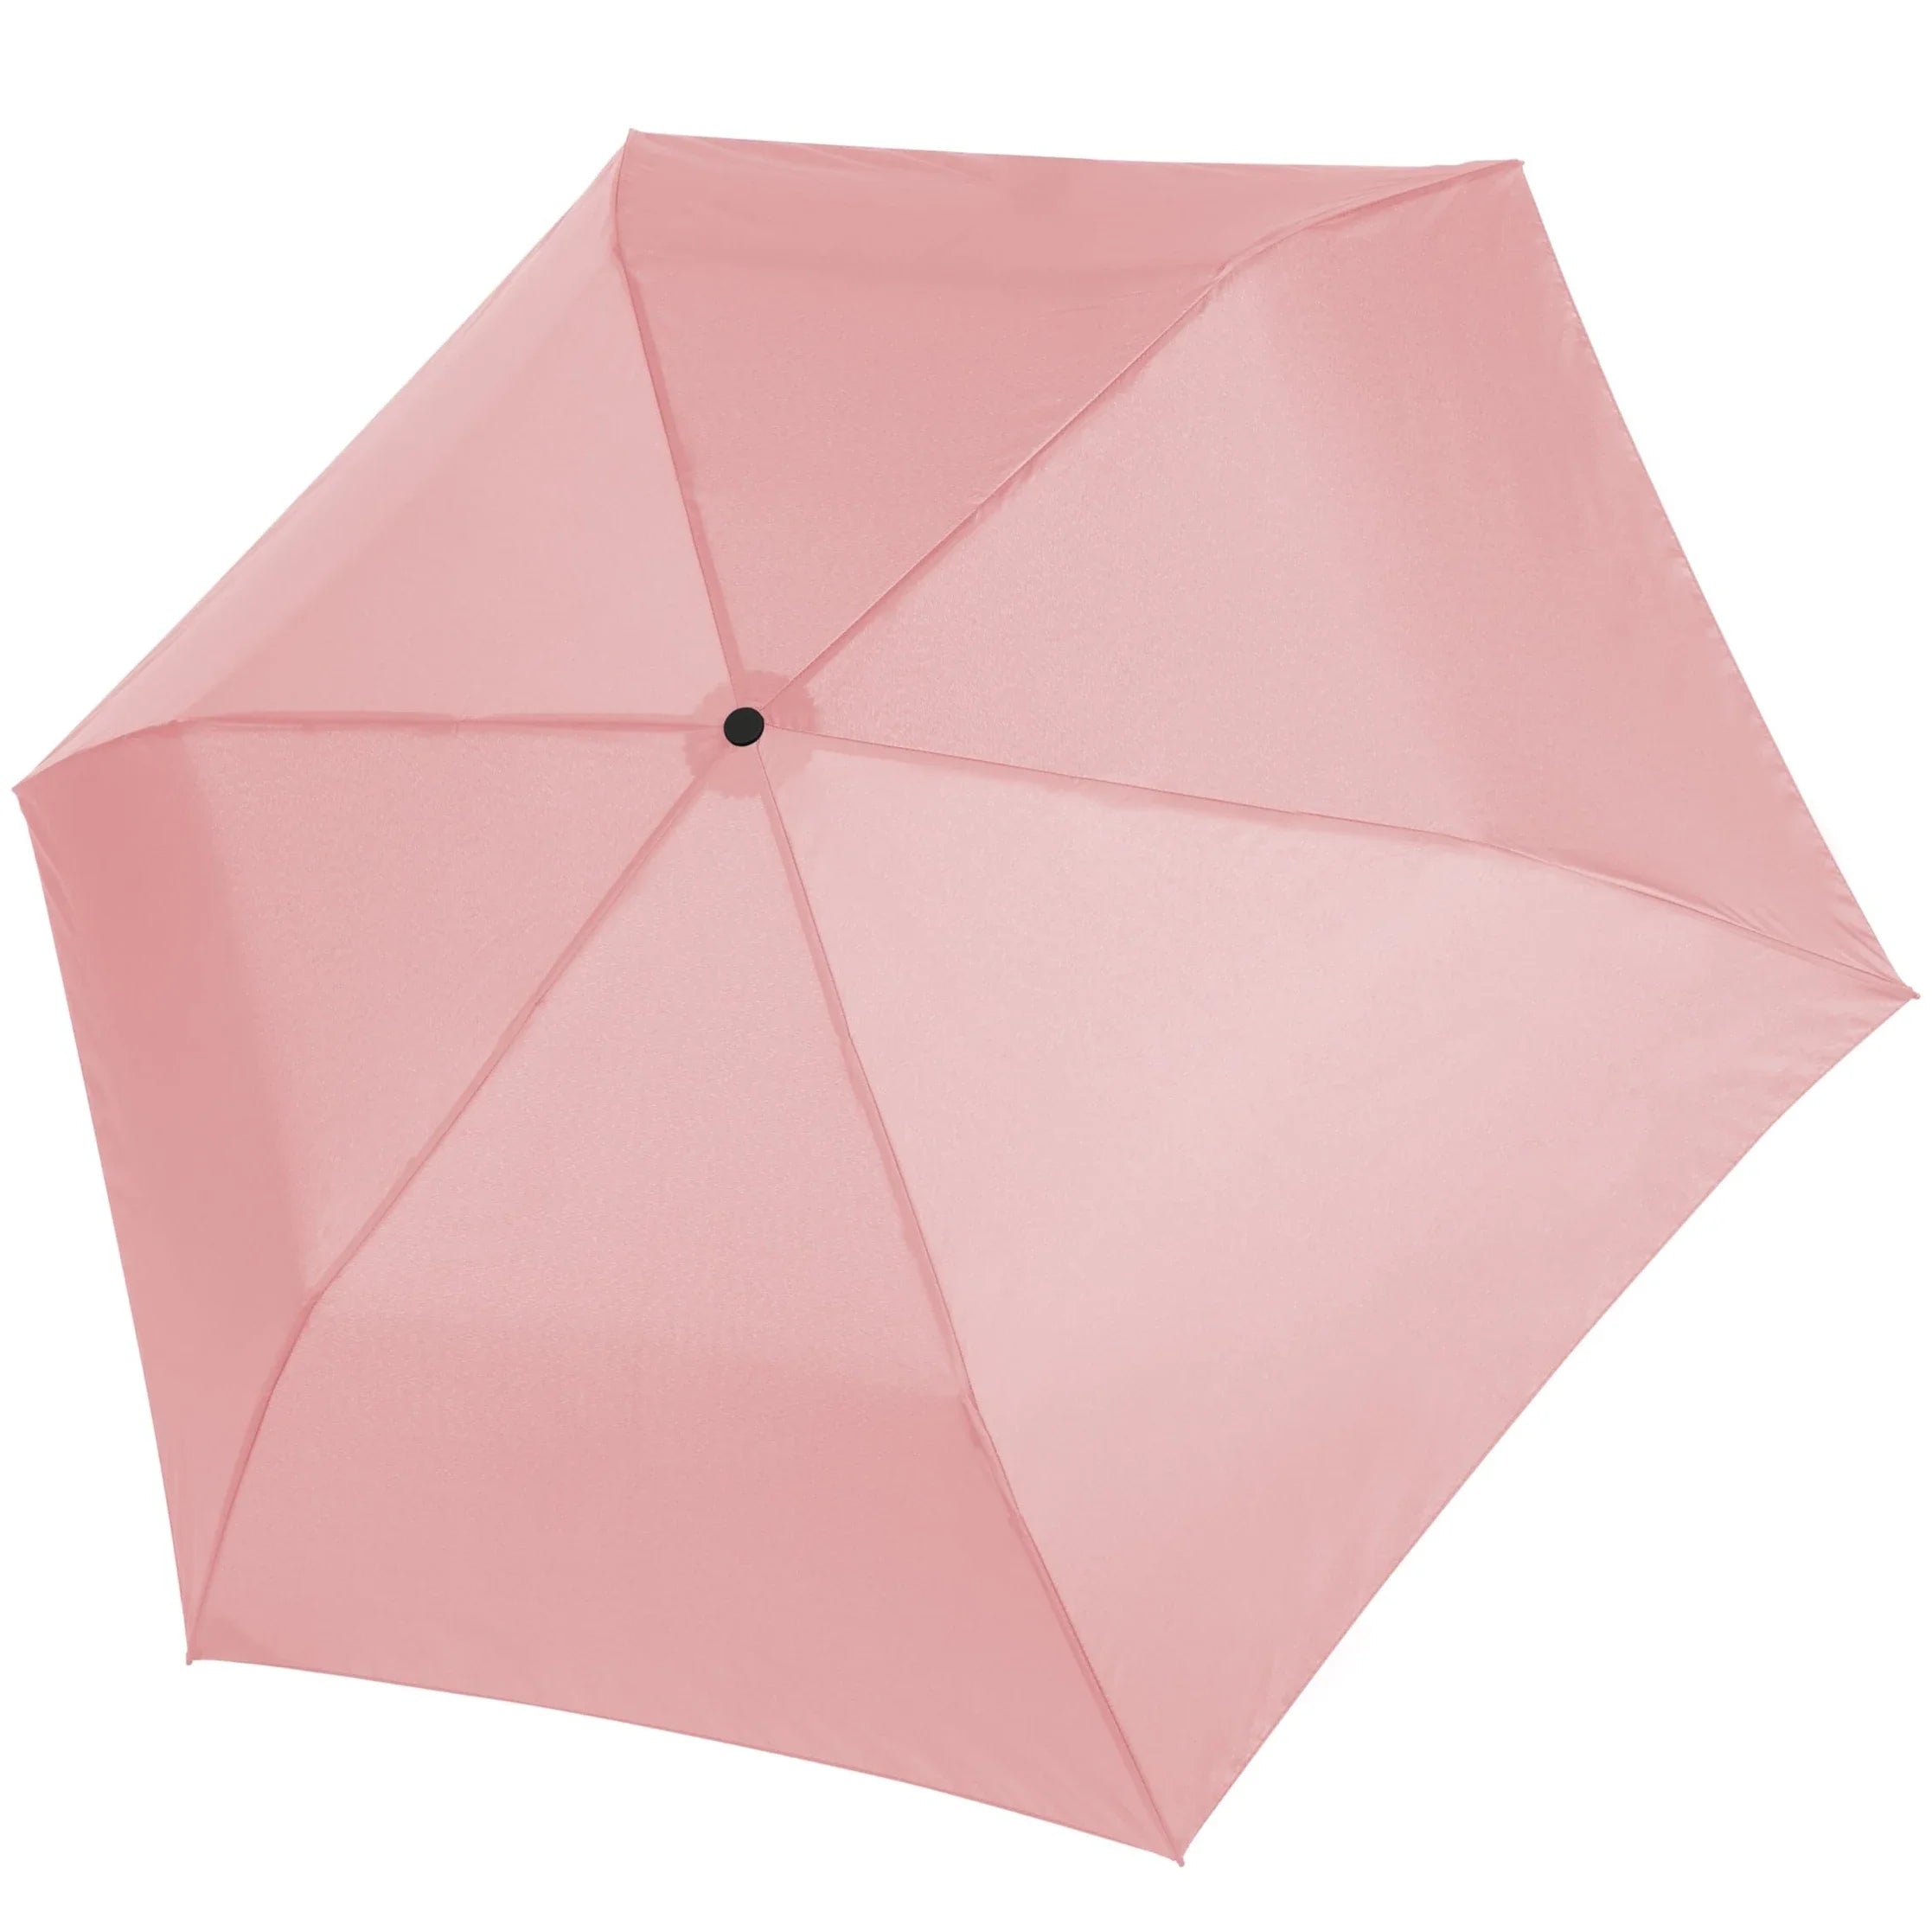 Doppler pocket umbrellas Zero99 pocket umbrella 21 cm - rose shadow